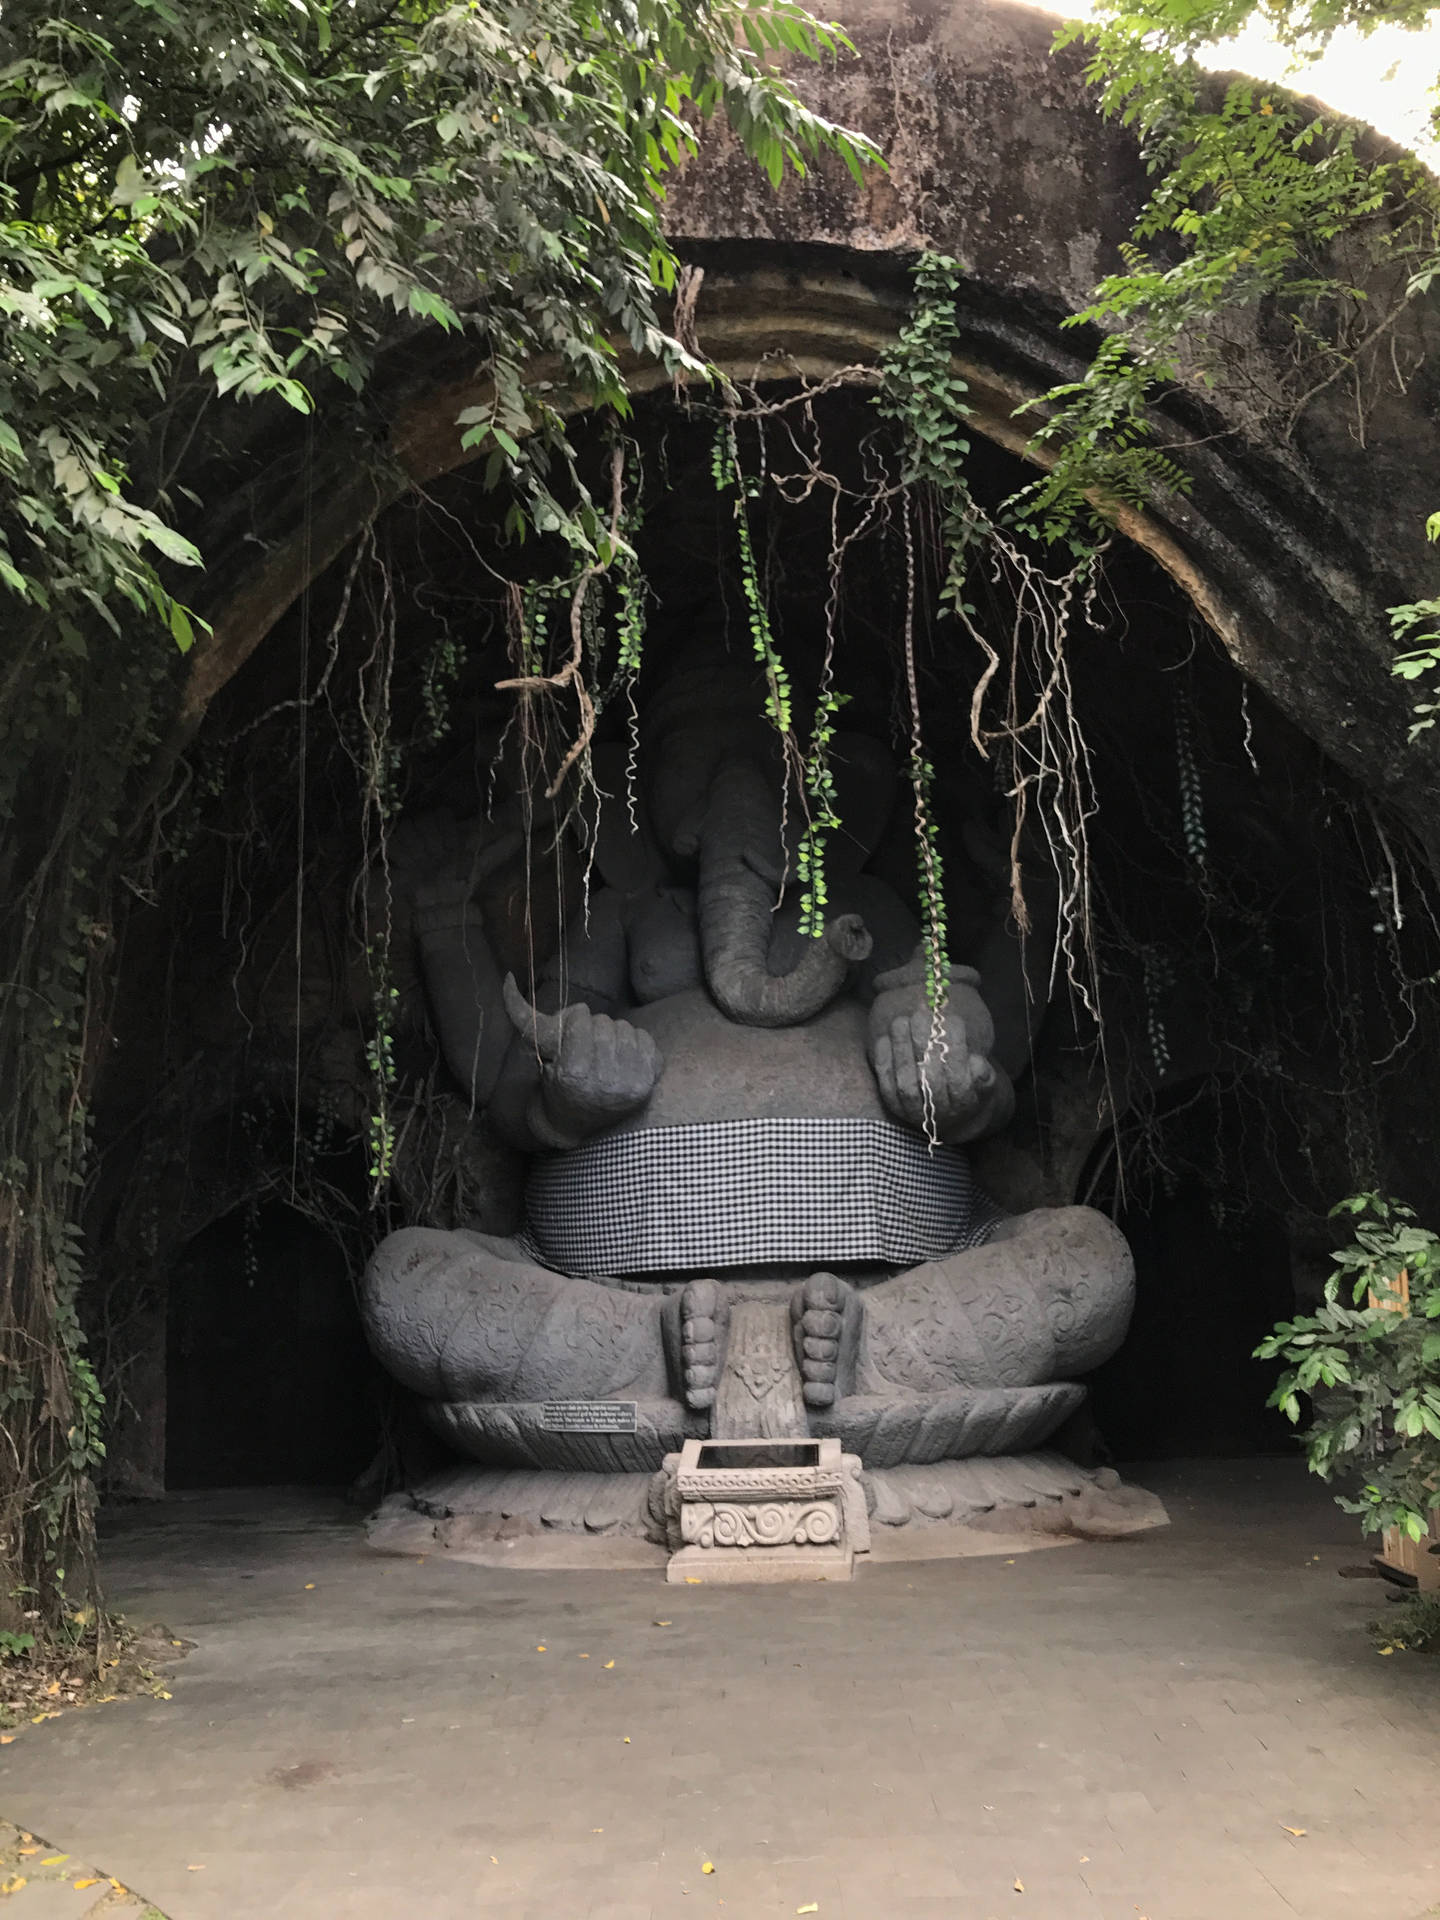 Ganesh 4k In Bali Background